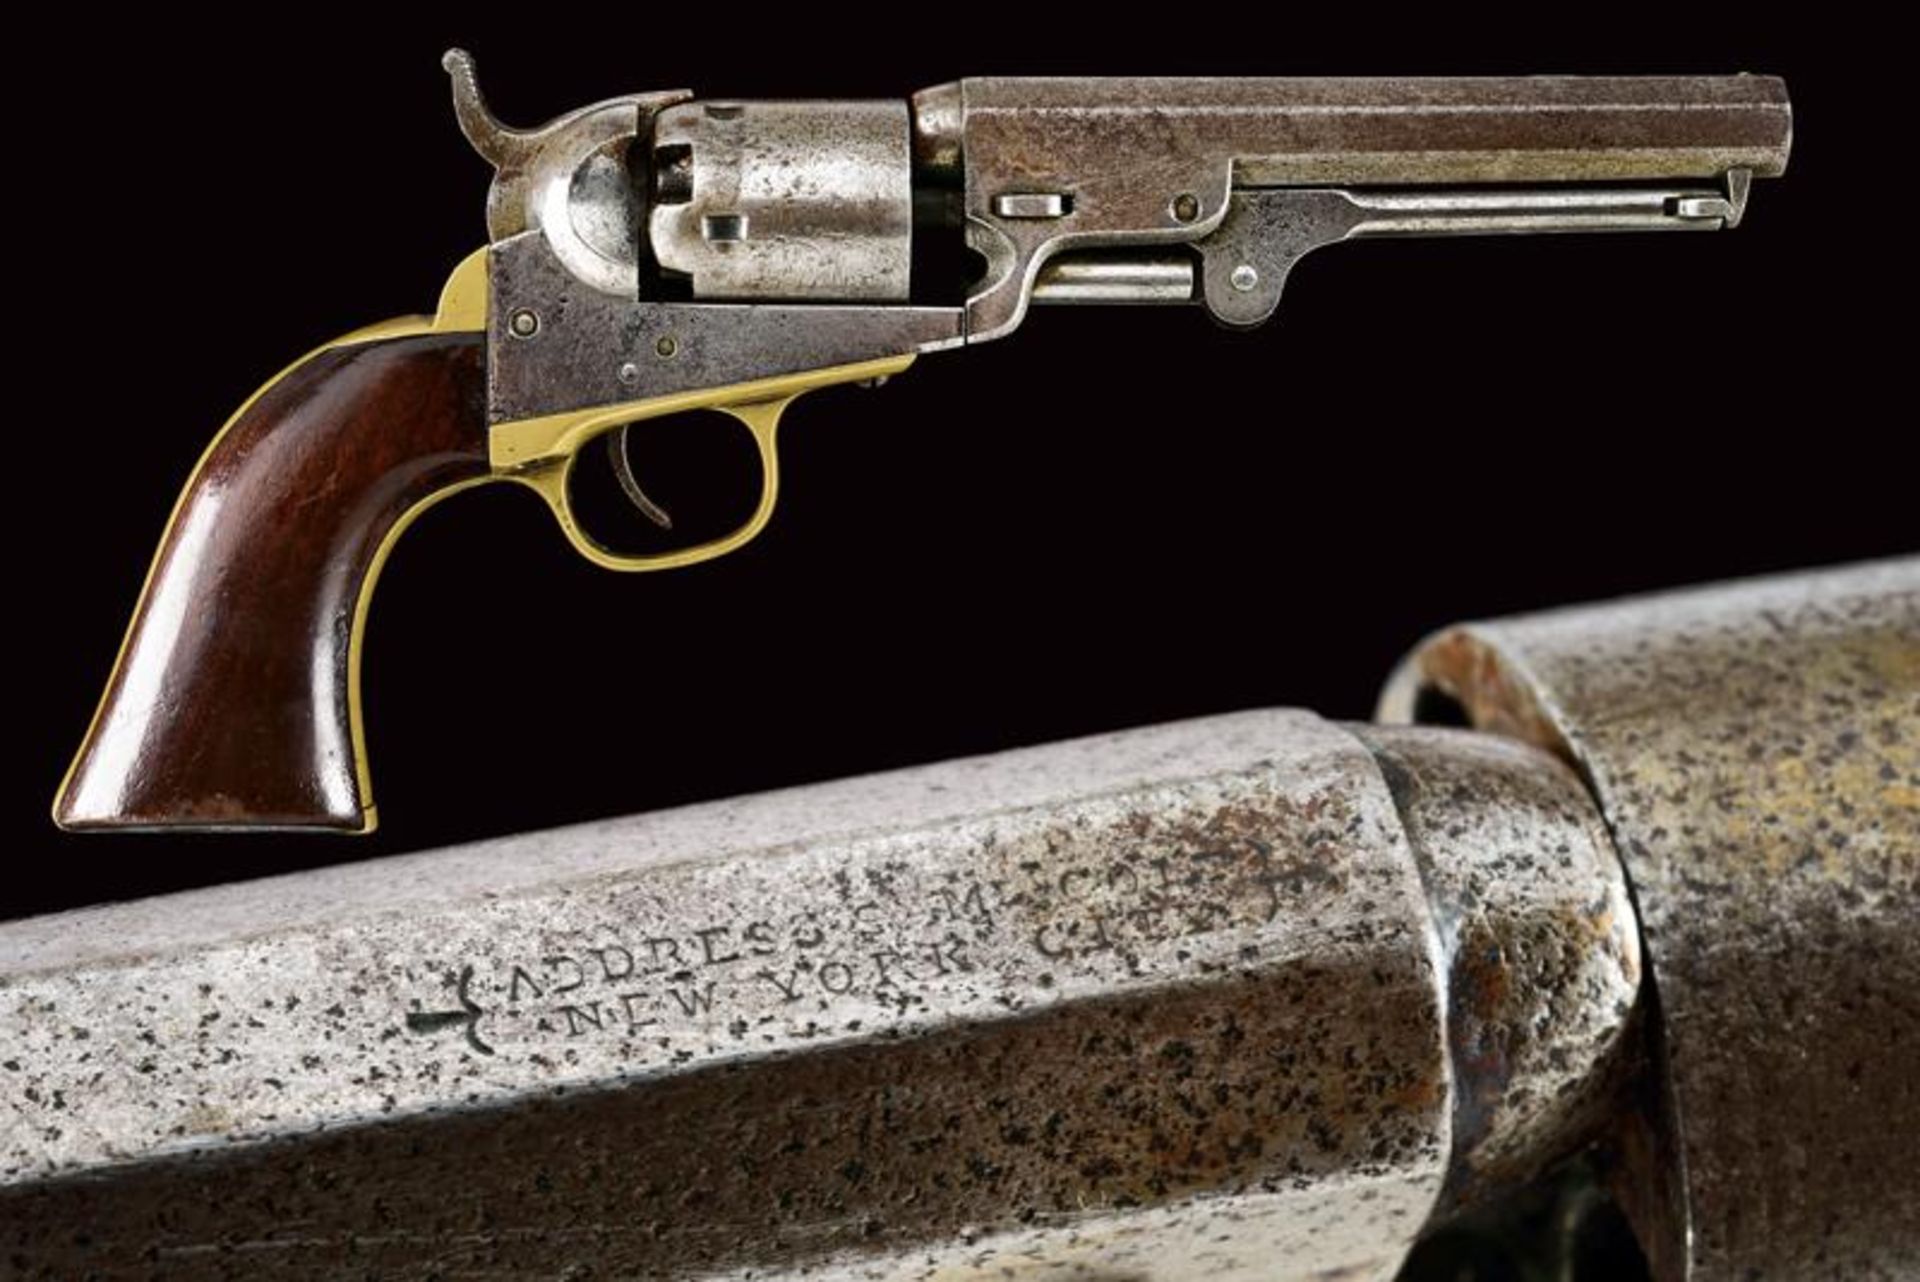 A Colt Model 1849 Pocket Revolver